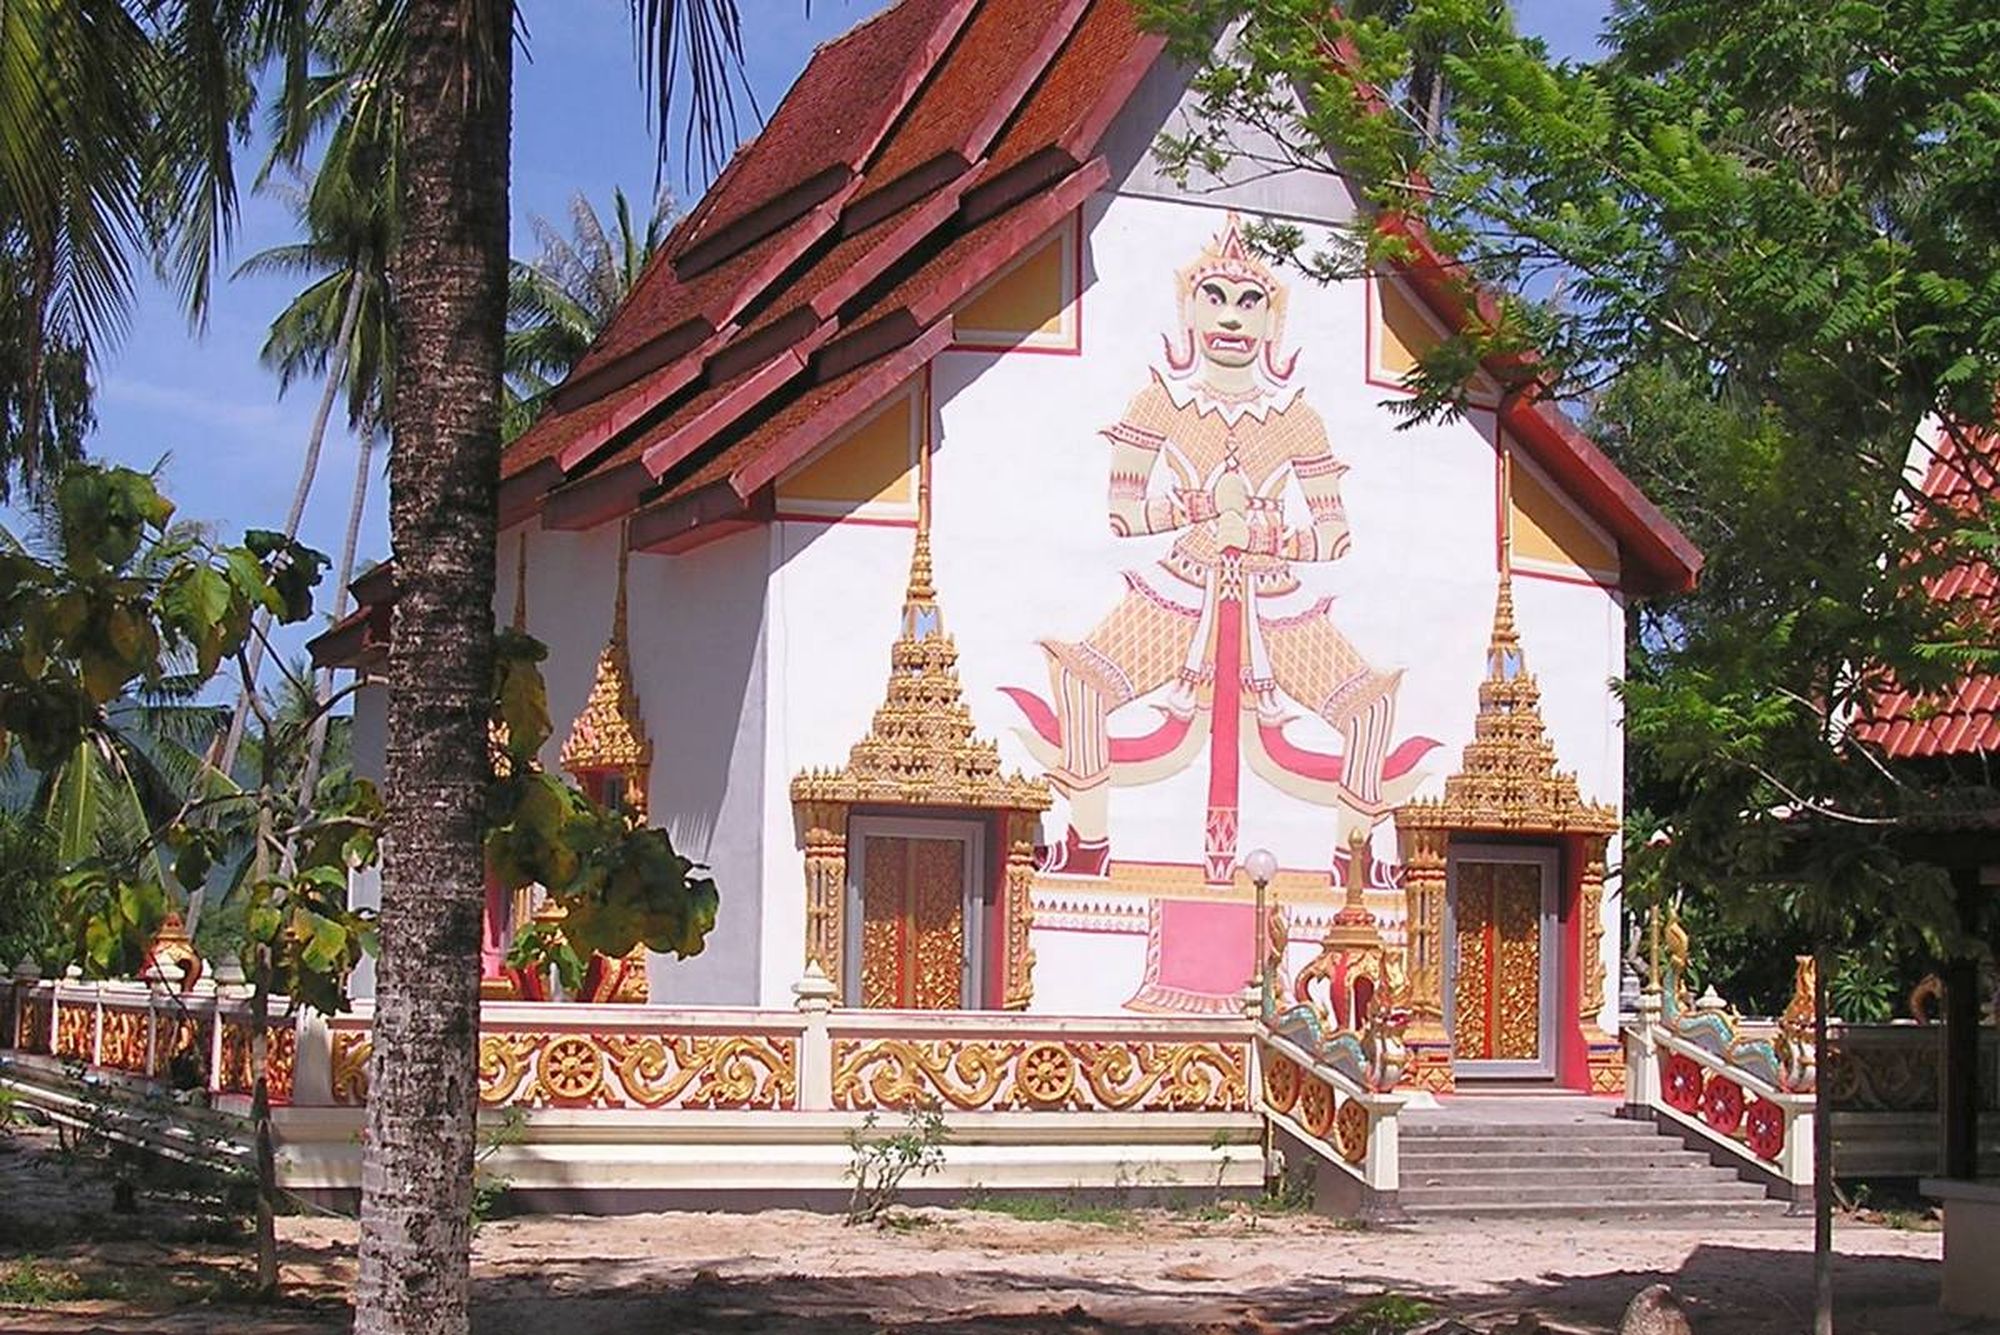 Near the Raja ferry to Don Sak is the Wat Nara Charoen Suk temple.